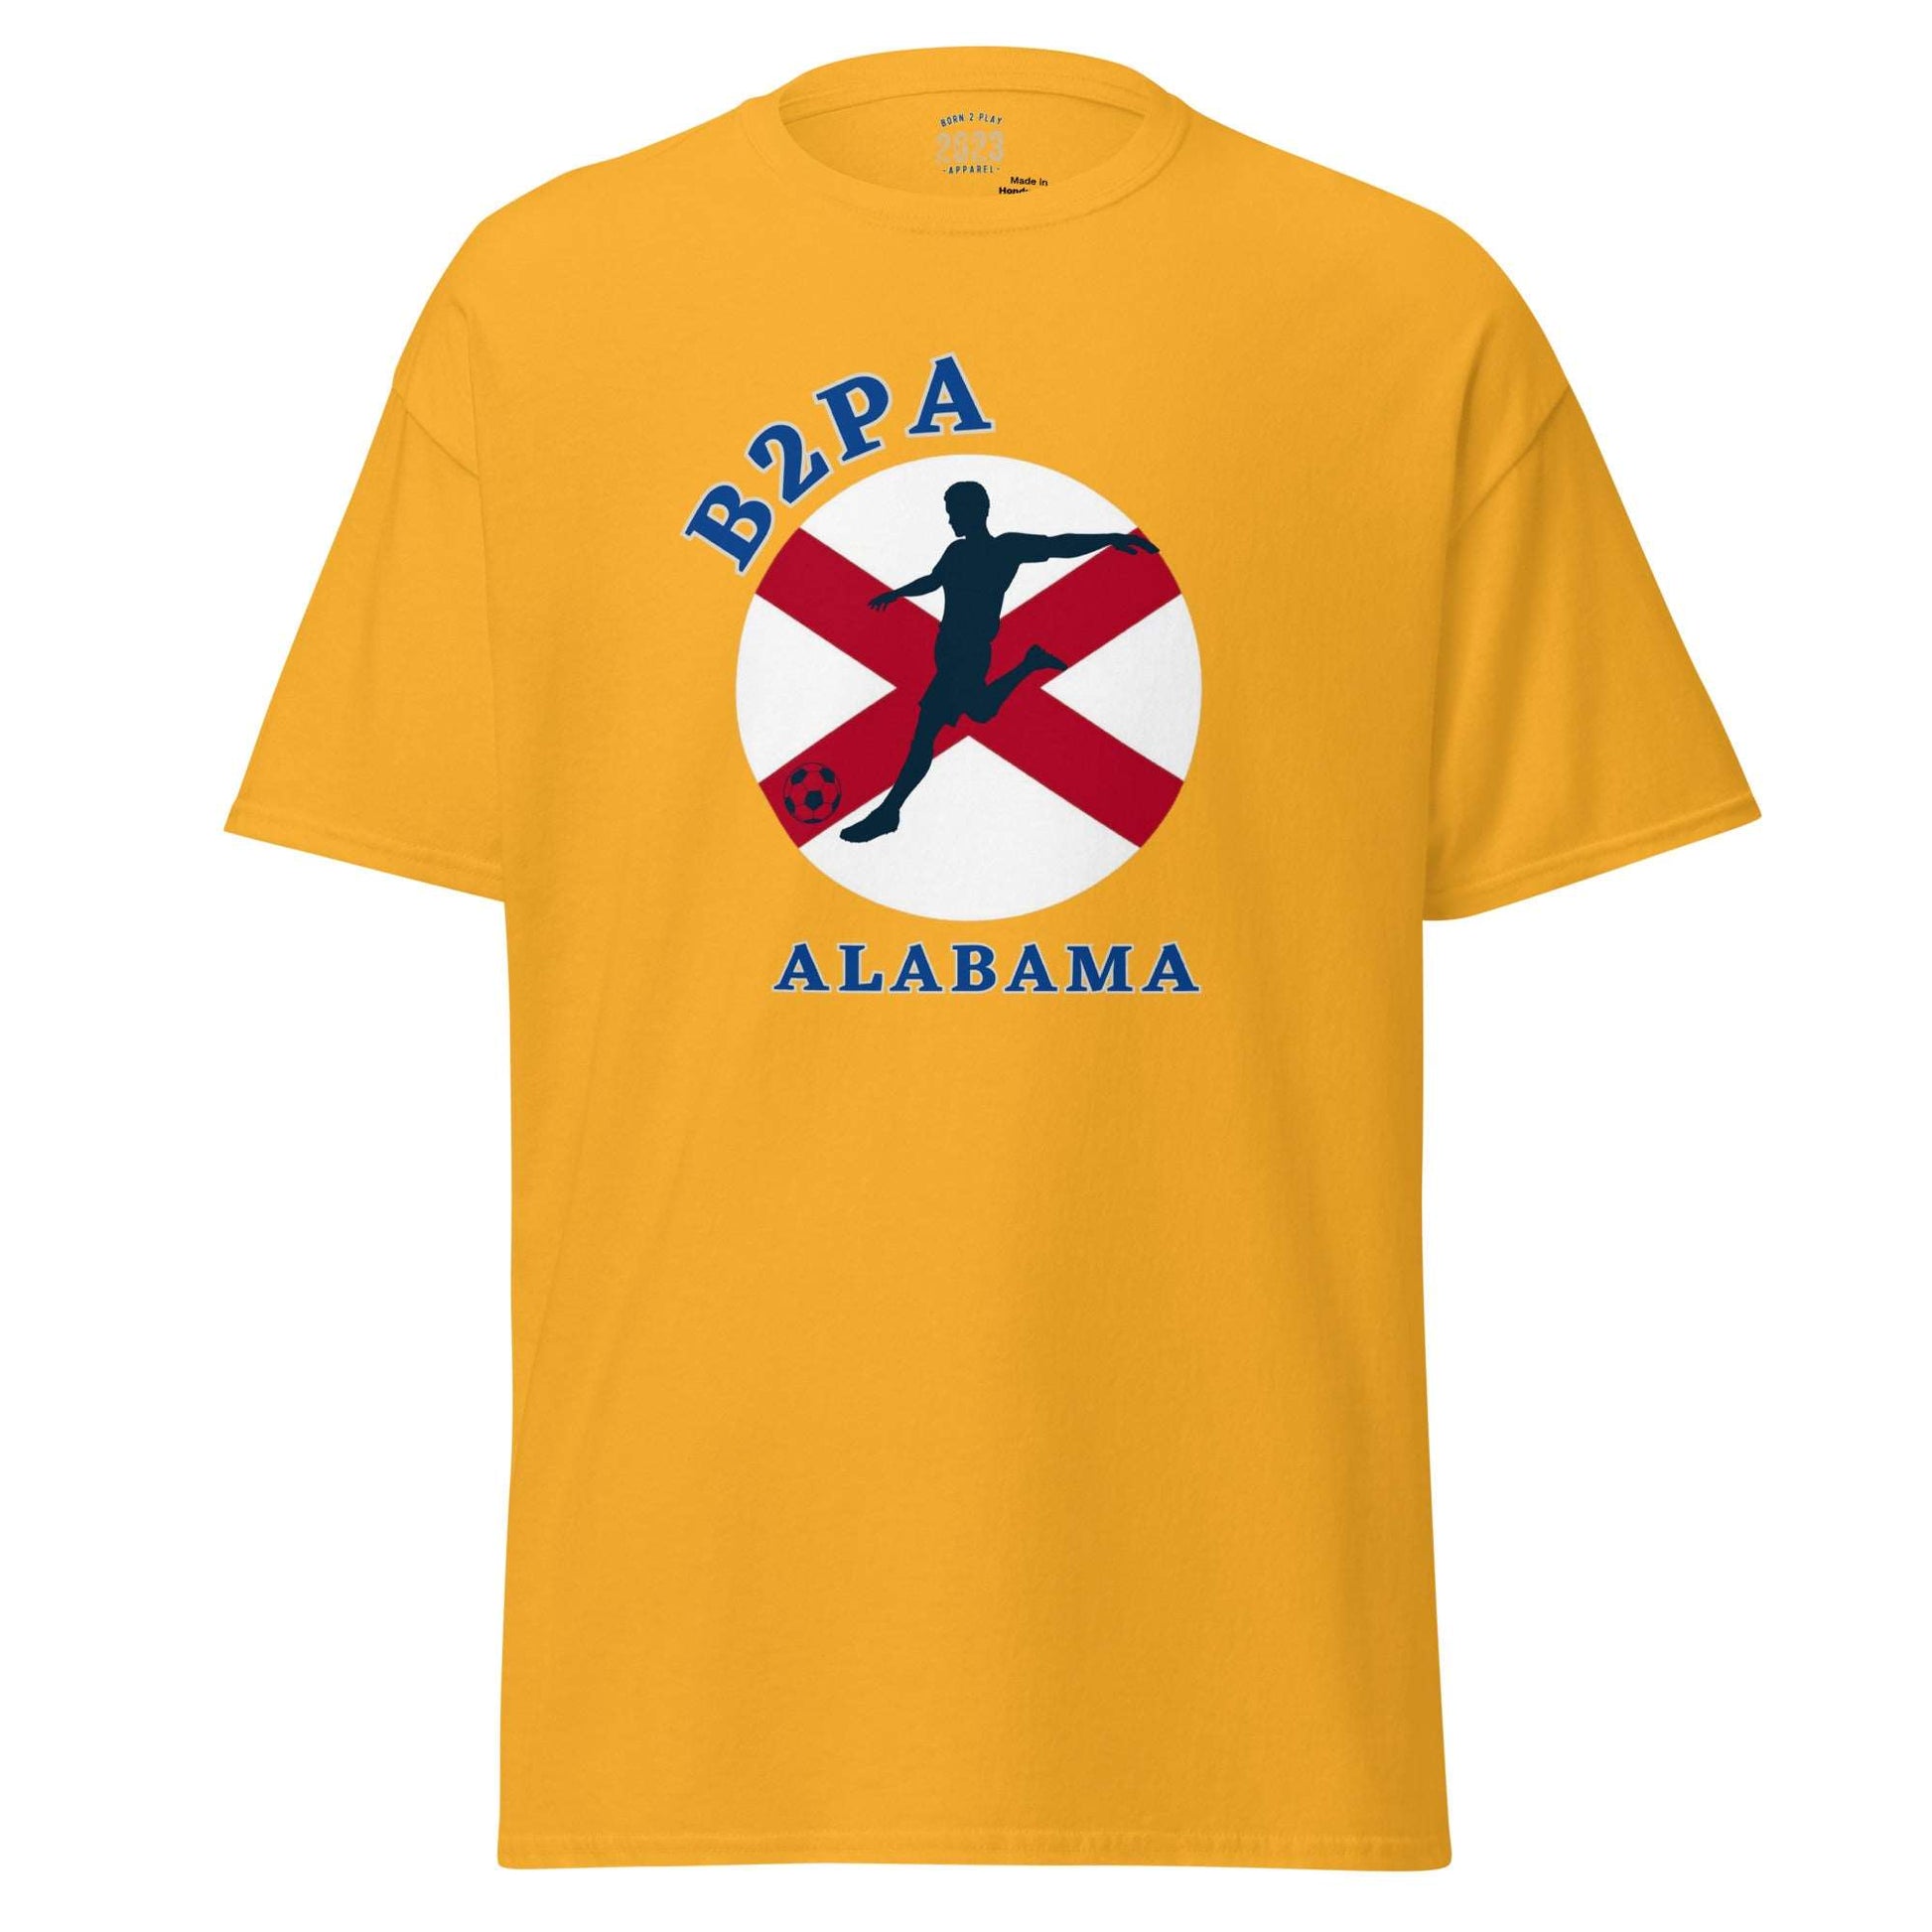 Alabama Bends it Better